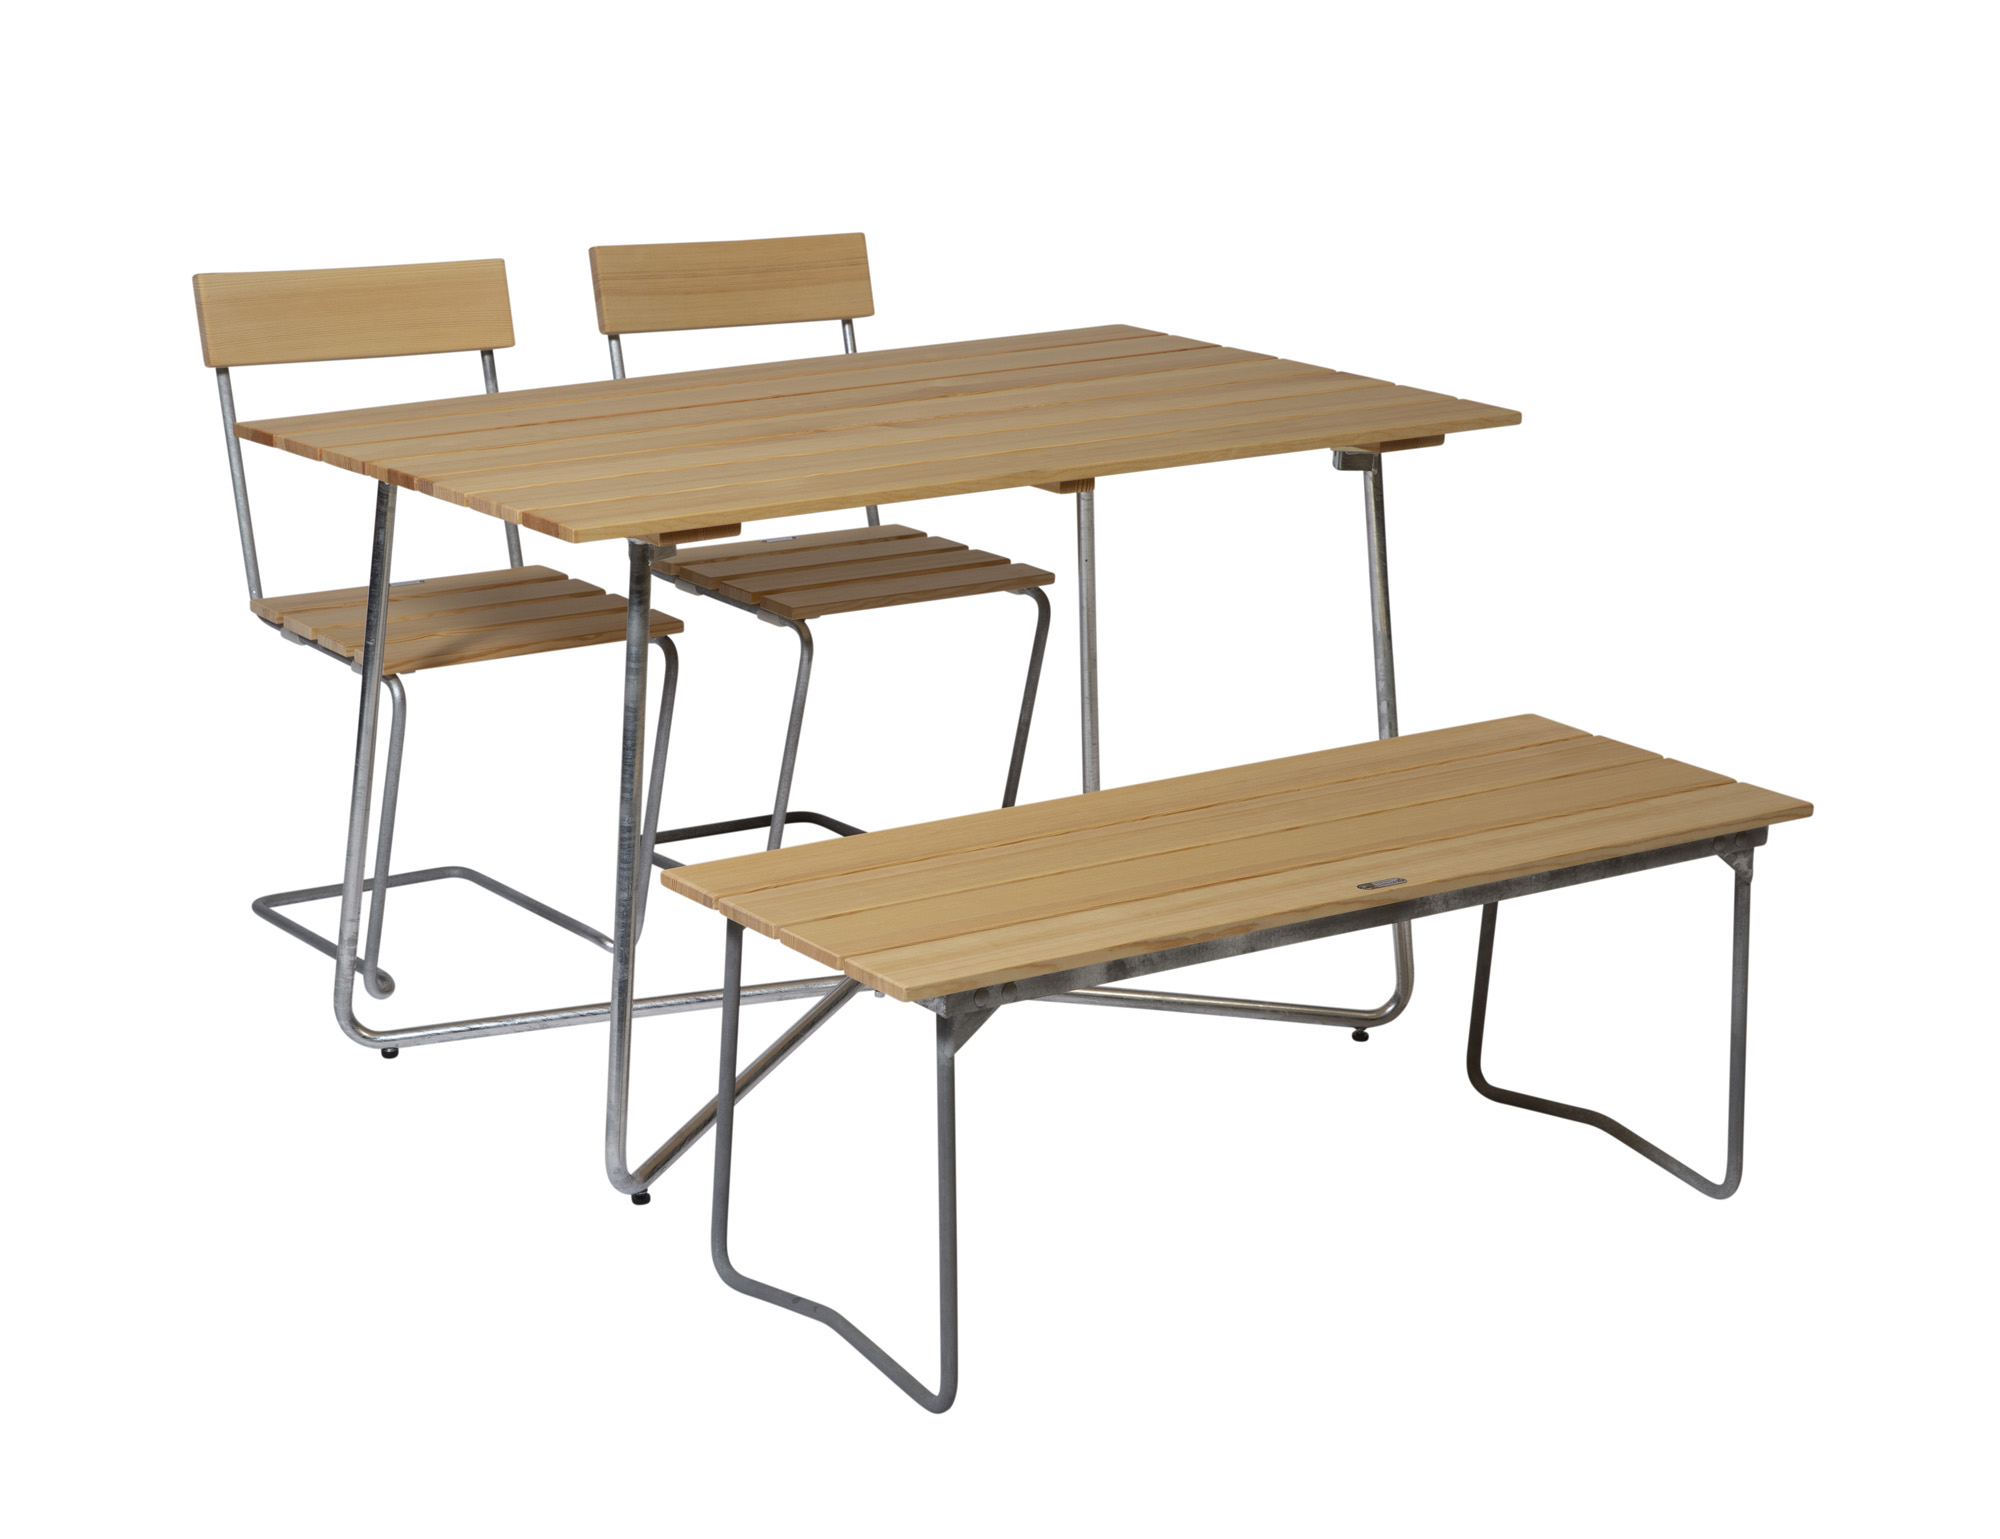 Grythyttan Stålmöbler B25 spisebordsæt Oljert furu/galvaniseret stål 2 stole, bænk 110 cm & bord120x70 cm